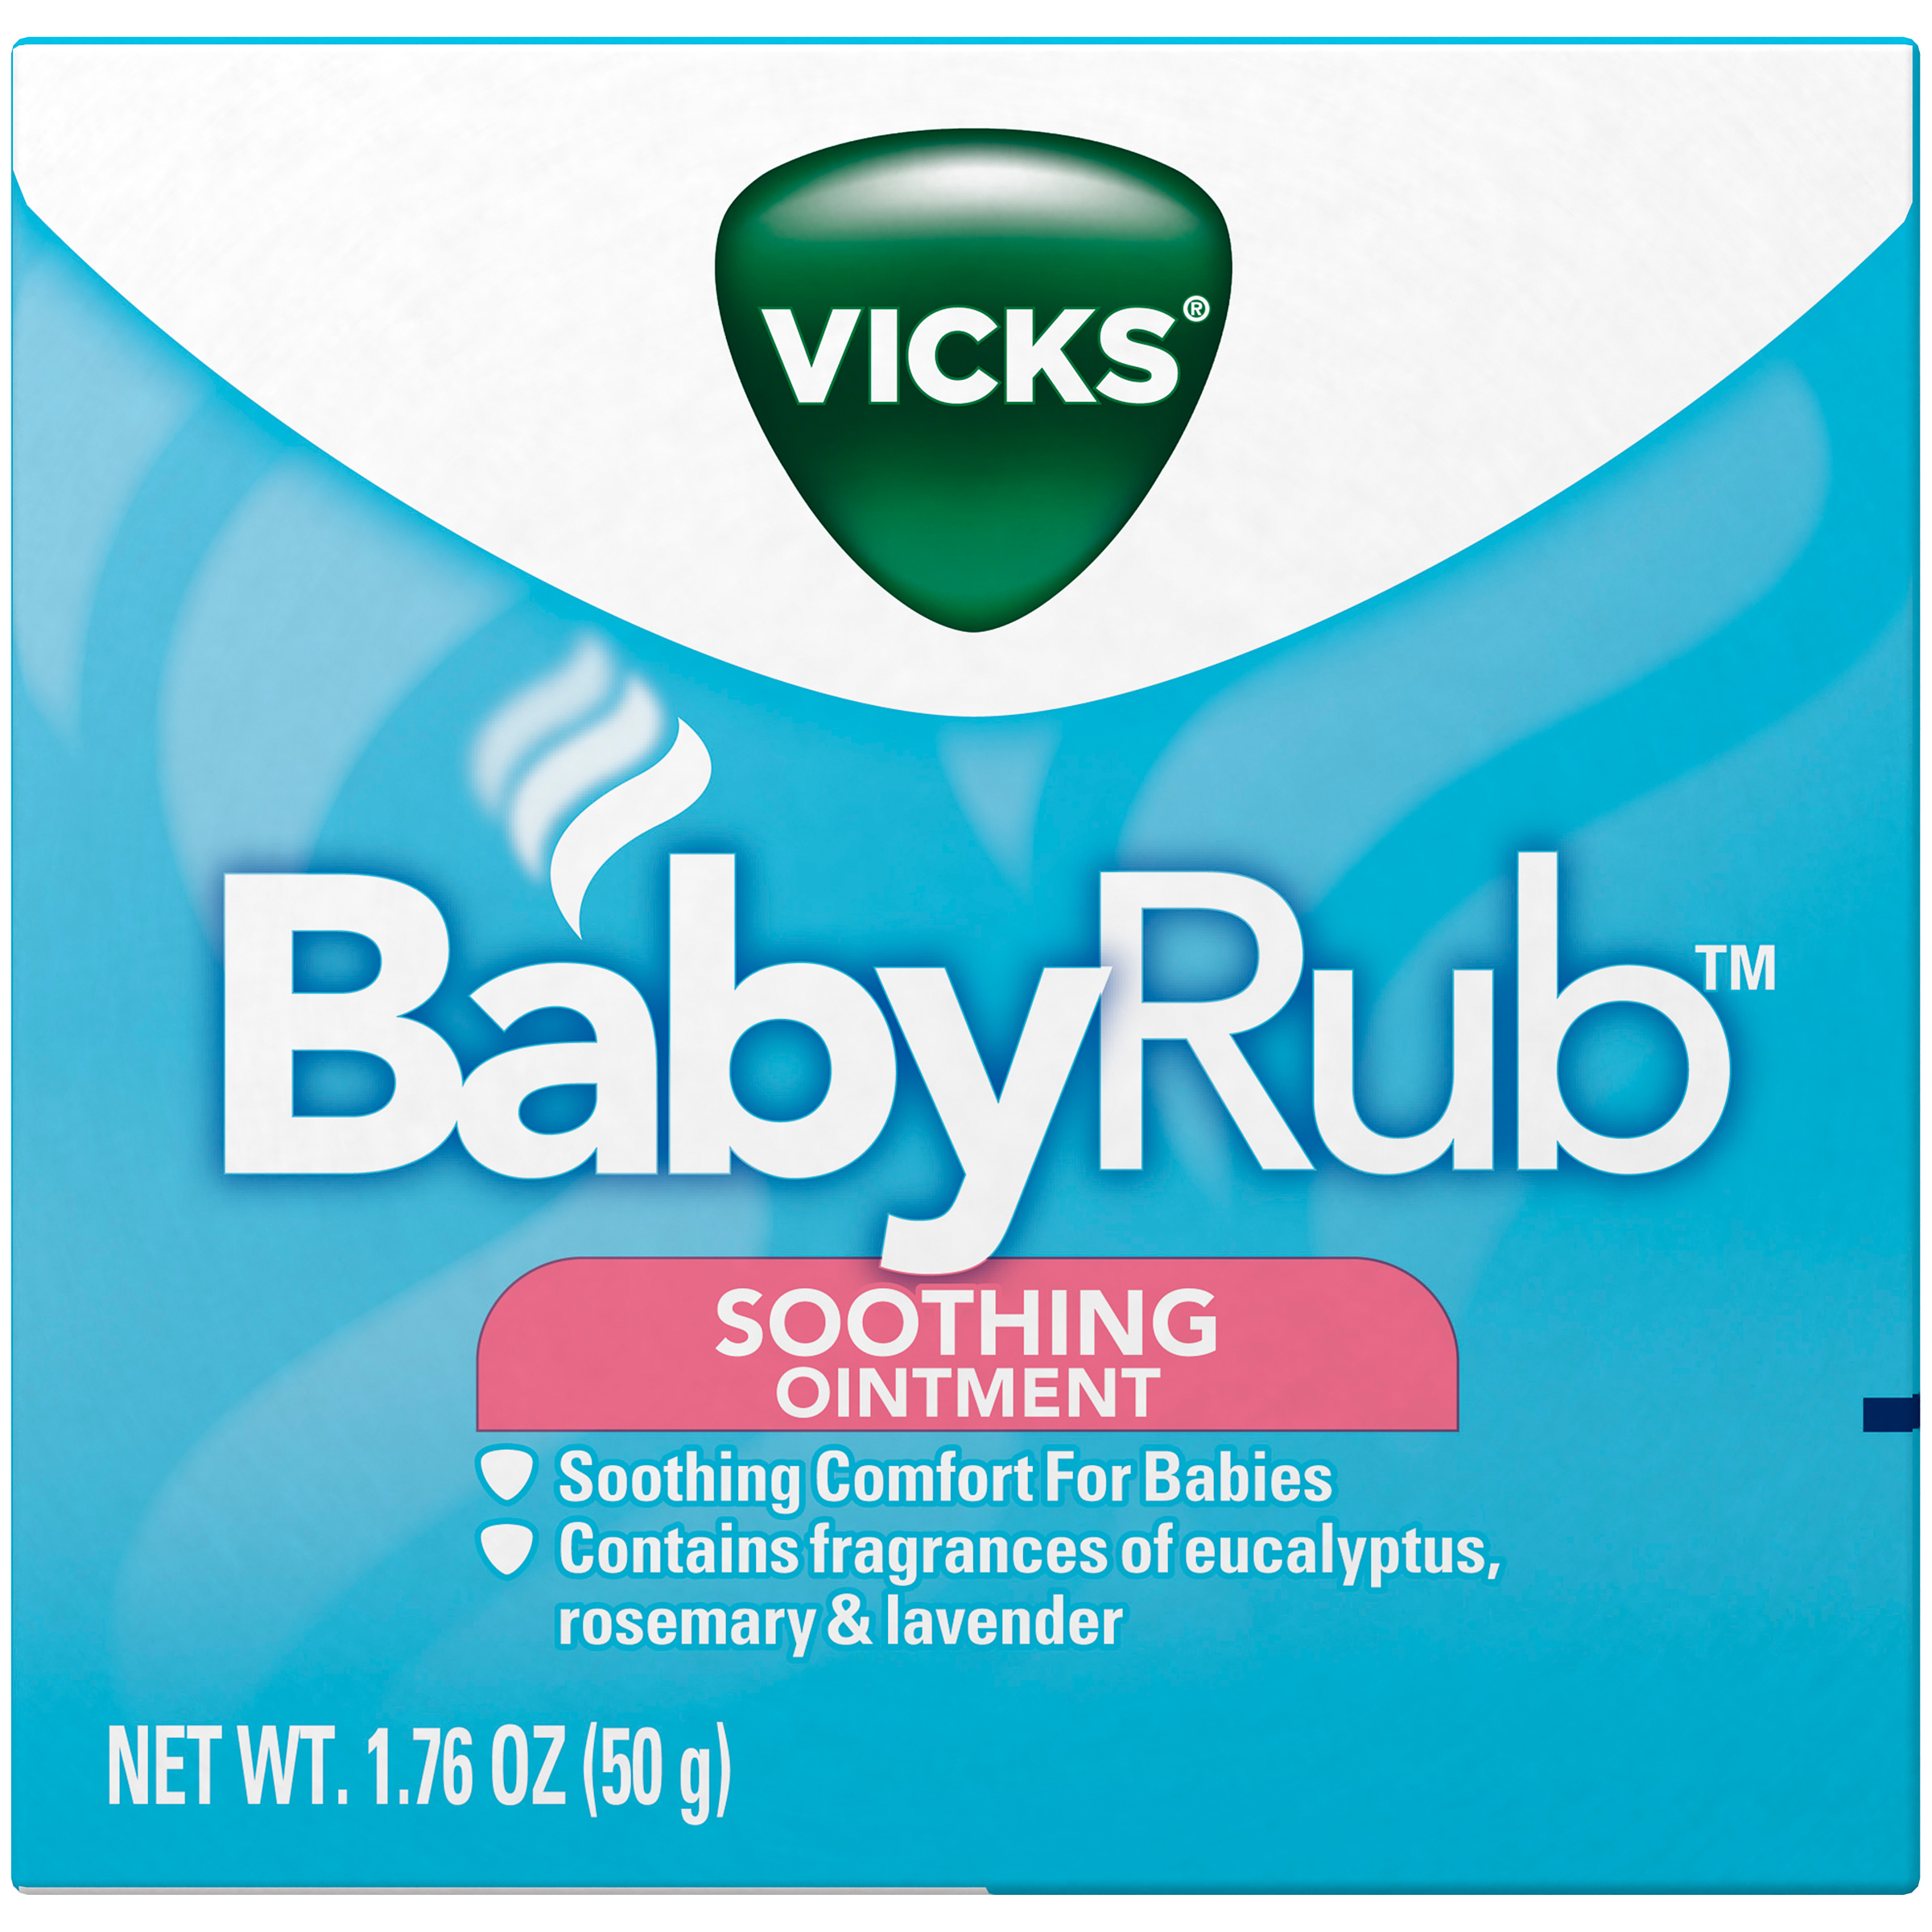 UPC 323900006171 - Vicks BabyRub Soothing Ointment, for Babies, 1.76 oz ...